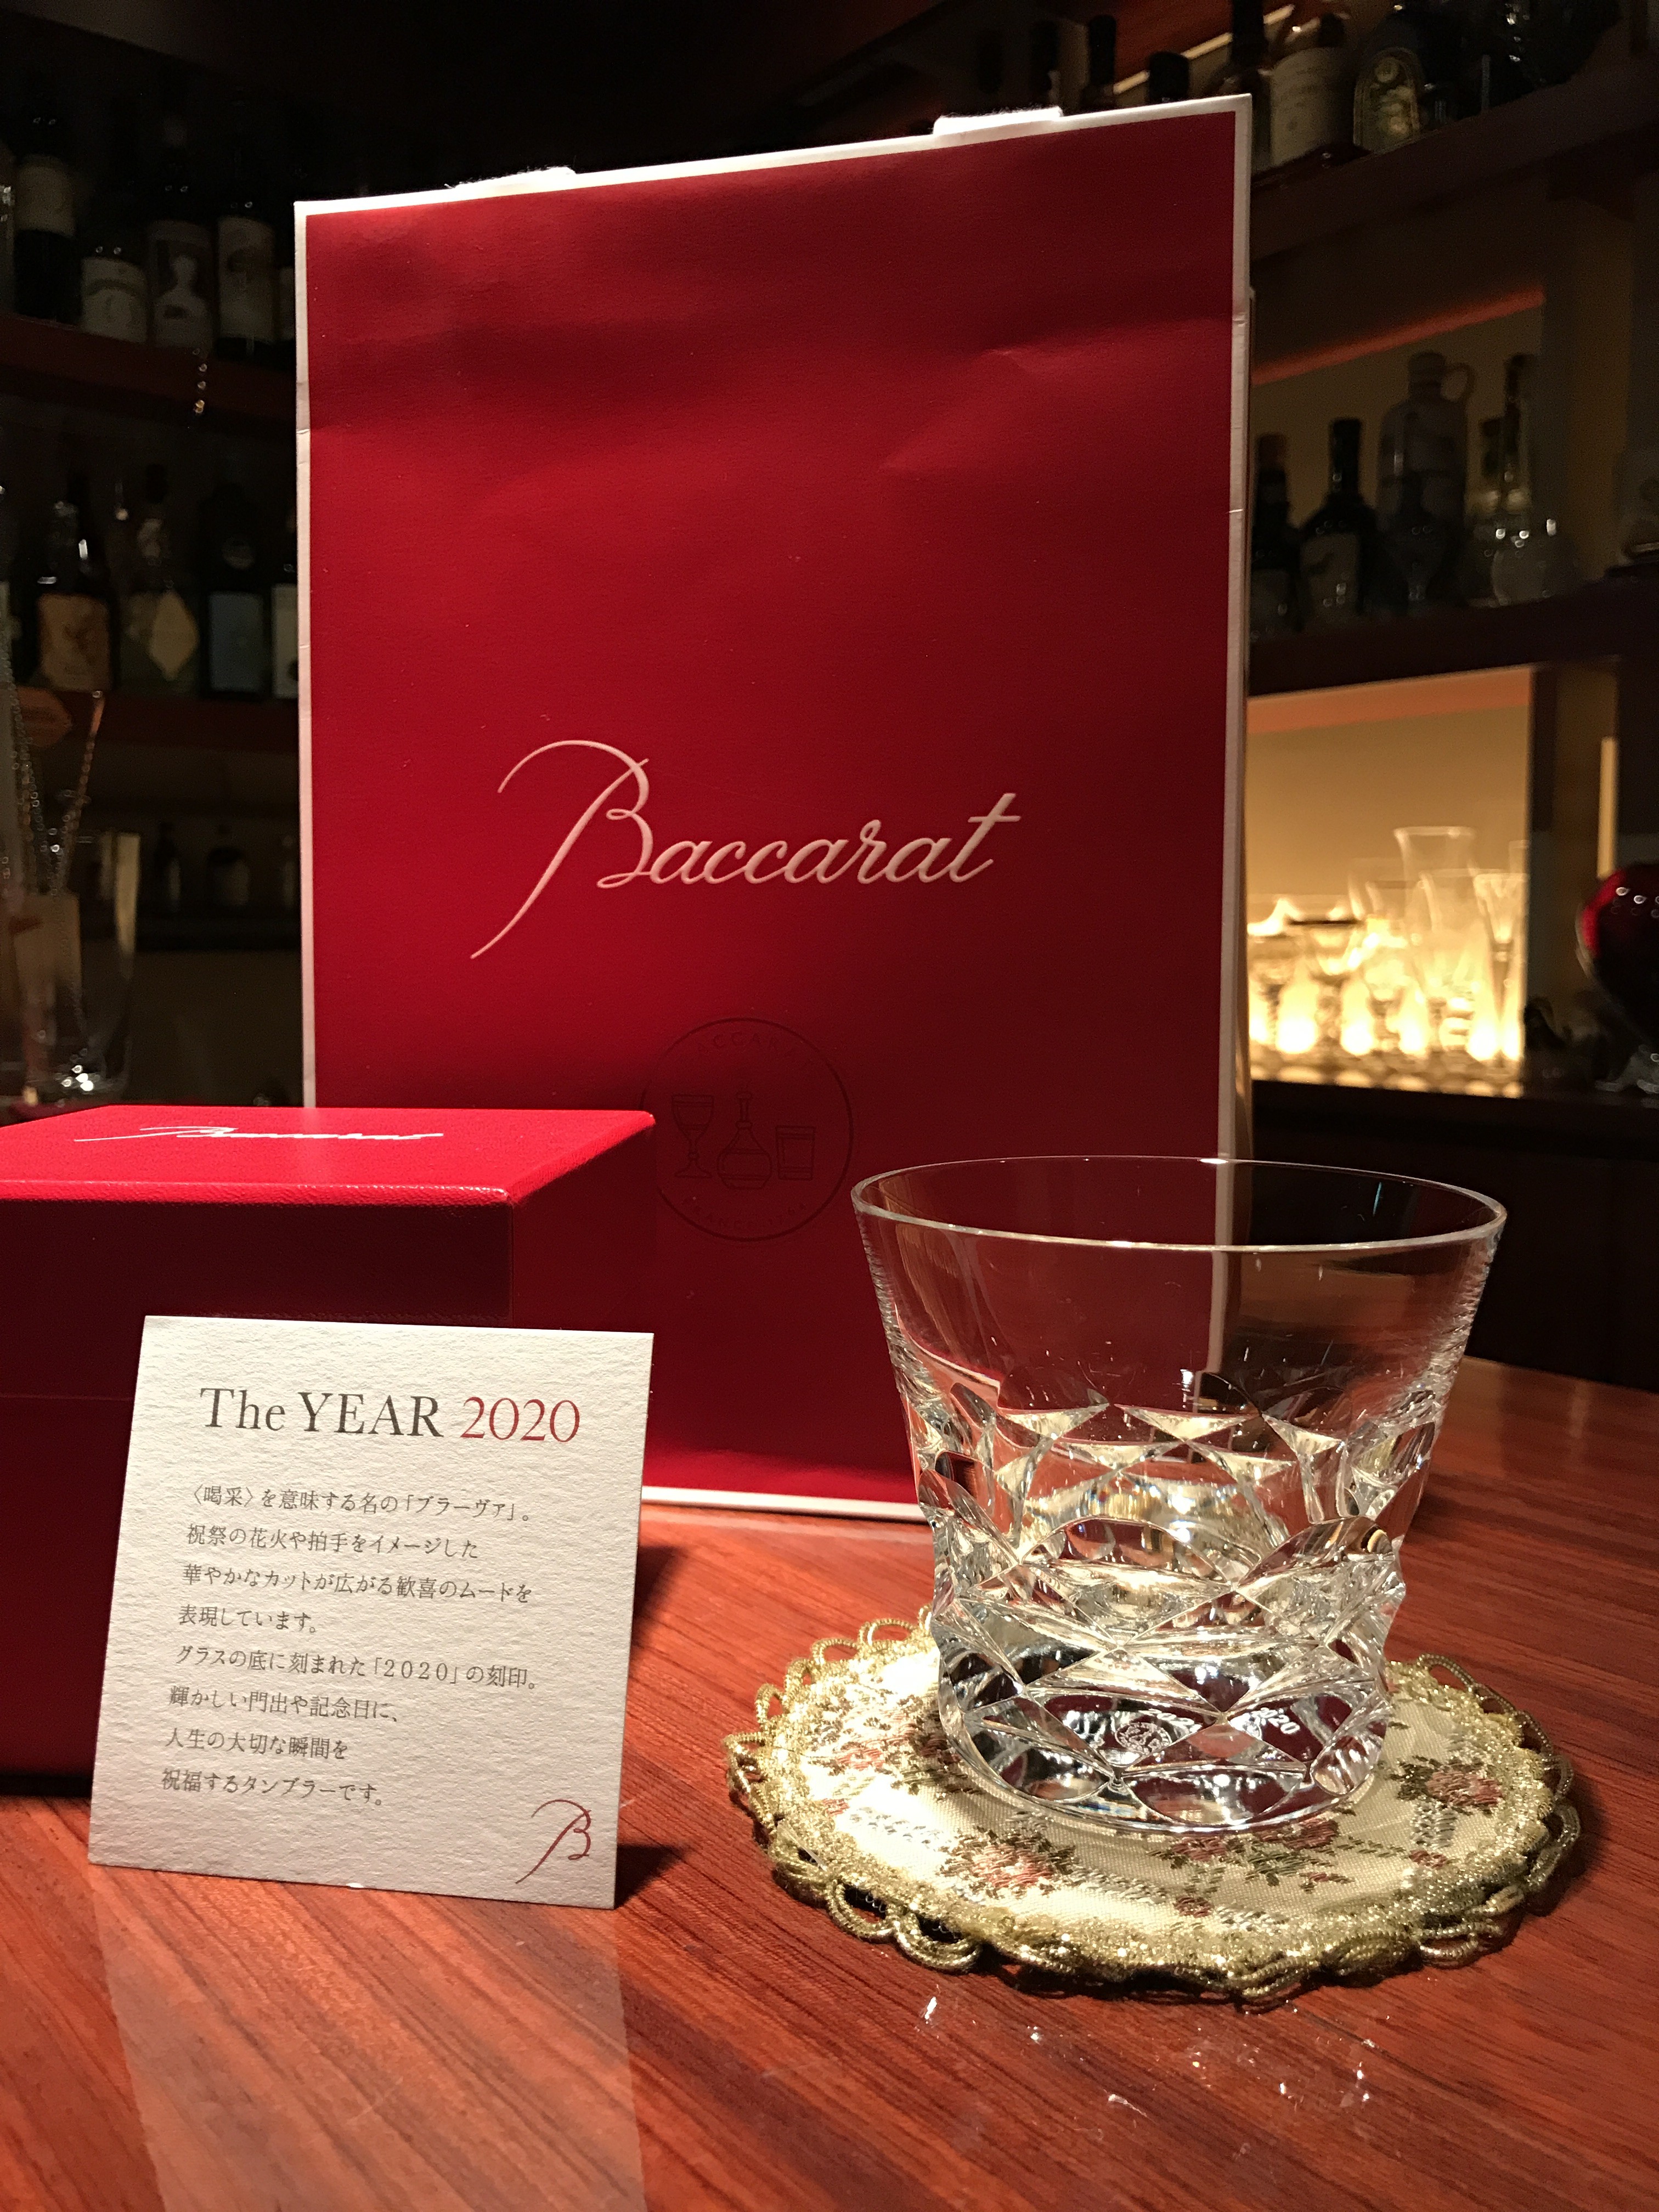 Baccarat The YEAR 2020 ‹ 錦糸町 バー Feel so good